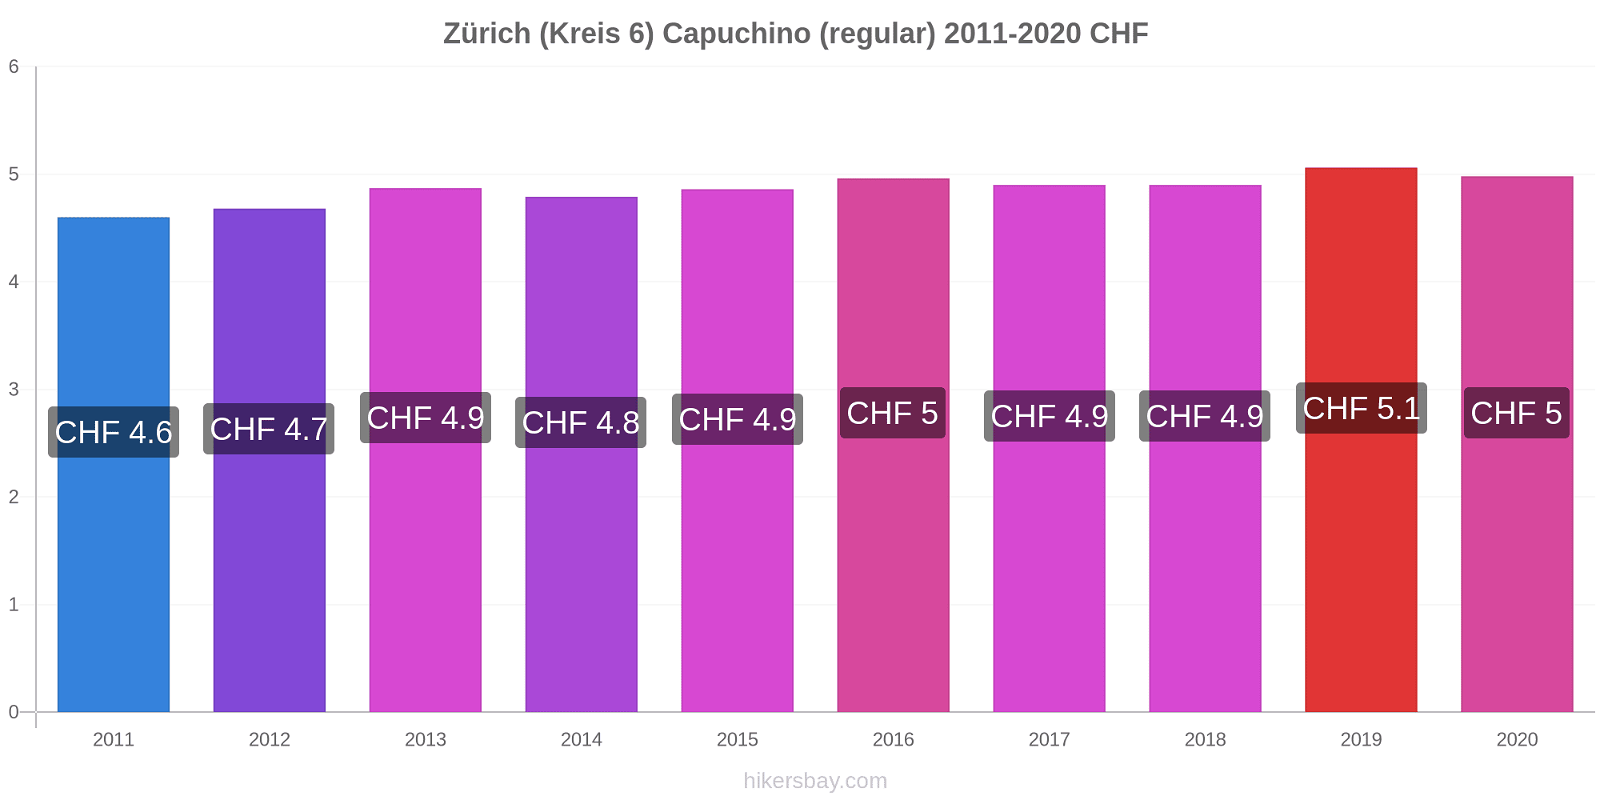 Zürich (Kreis 6) cambios de precios Capuchino (regular) hikersbay.com